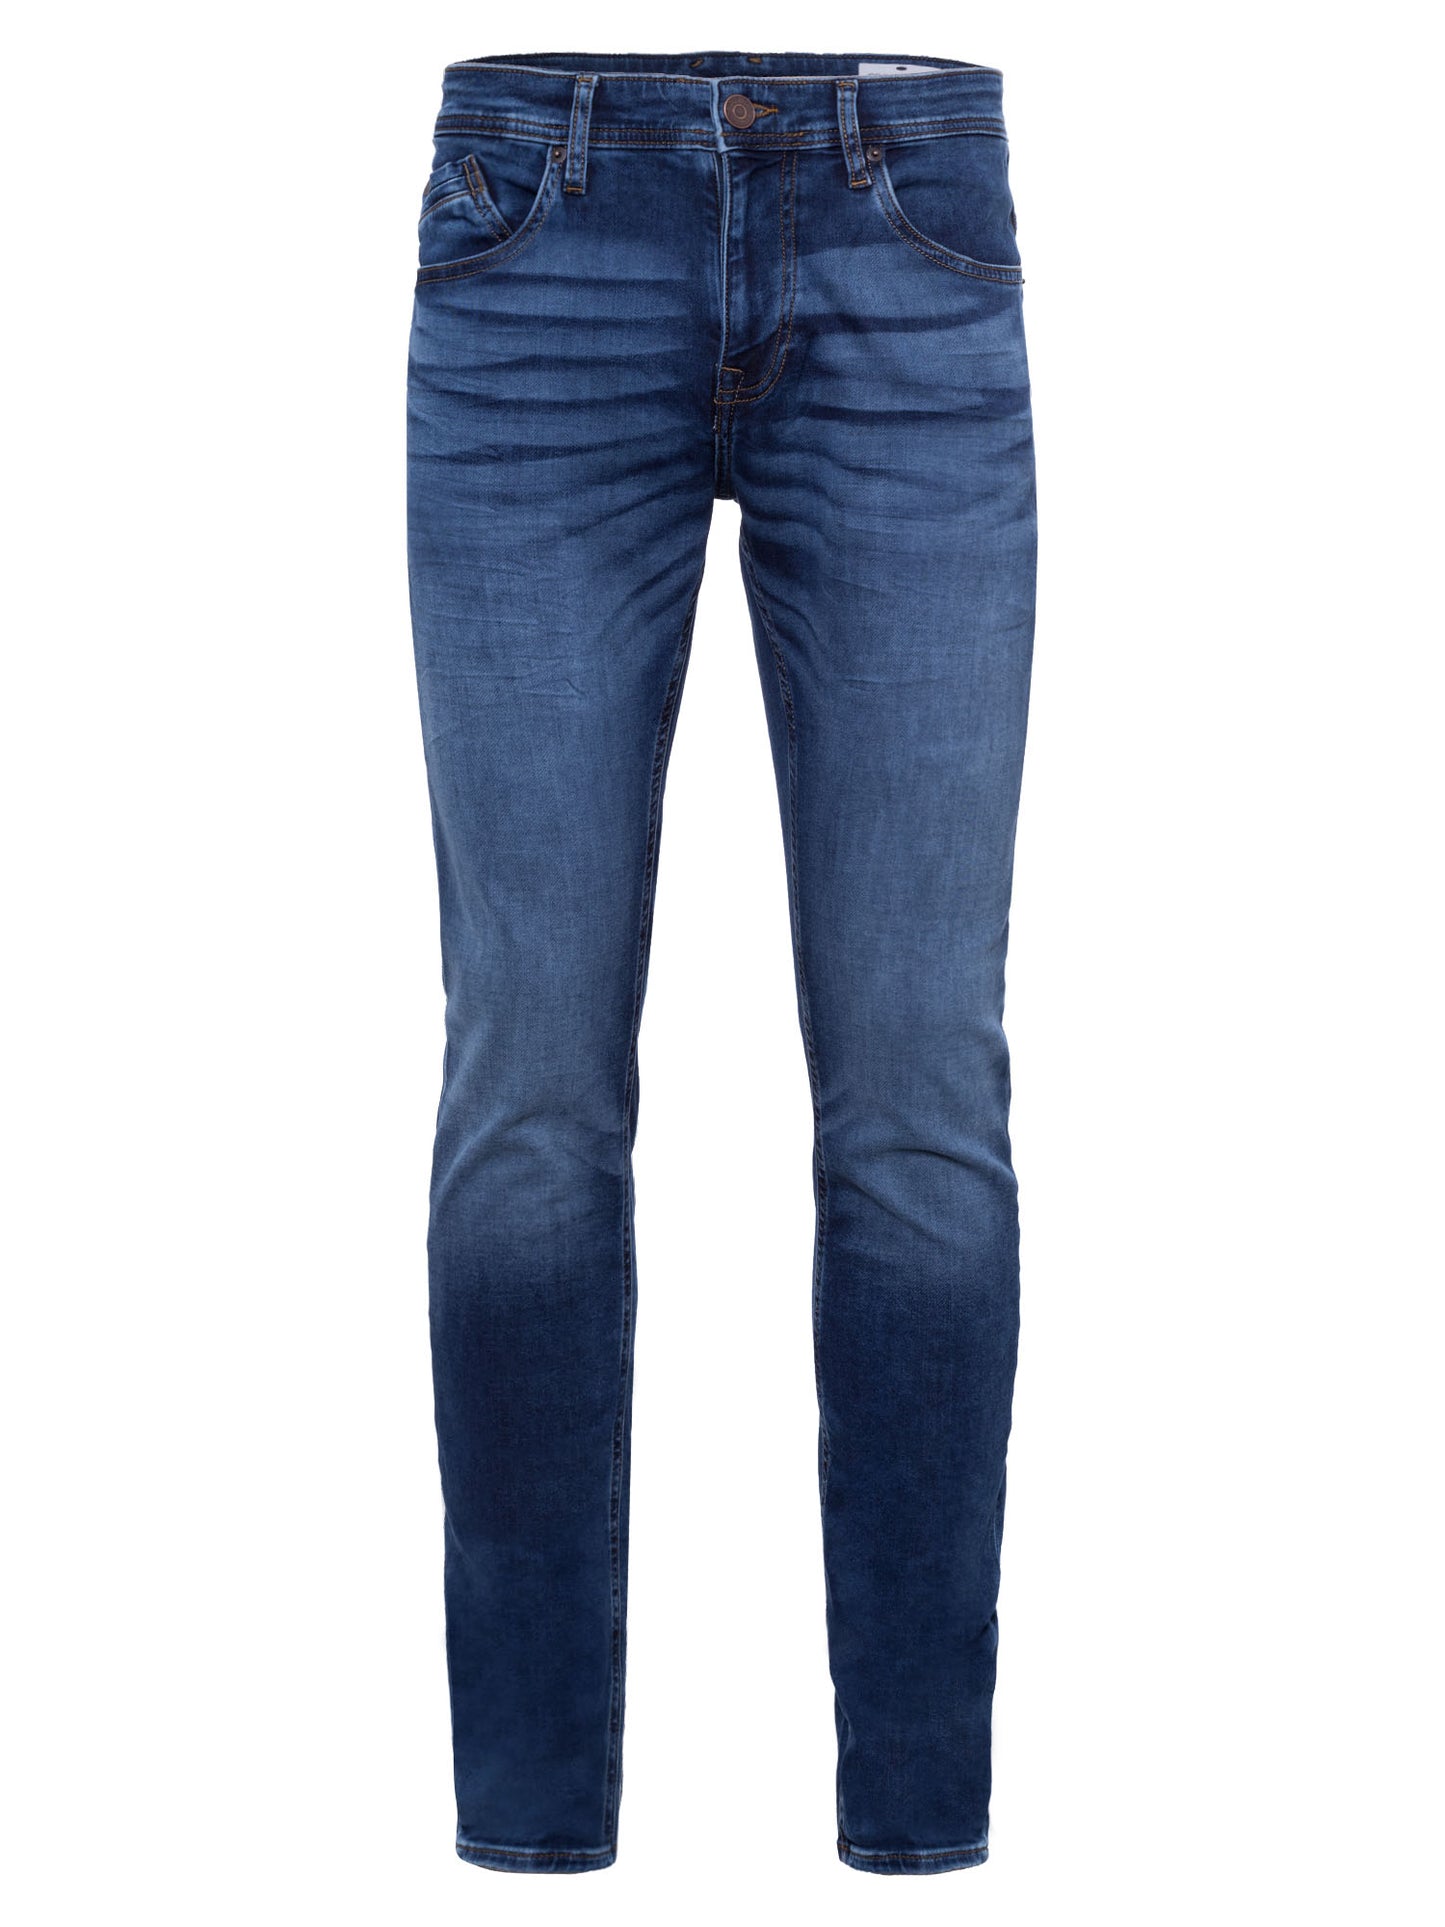 Jimi men's jeans slim fit regular waist tapered leg blue